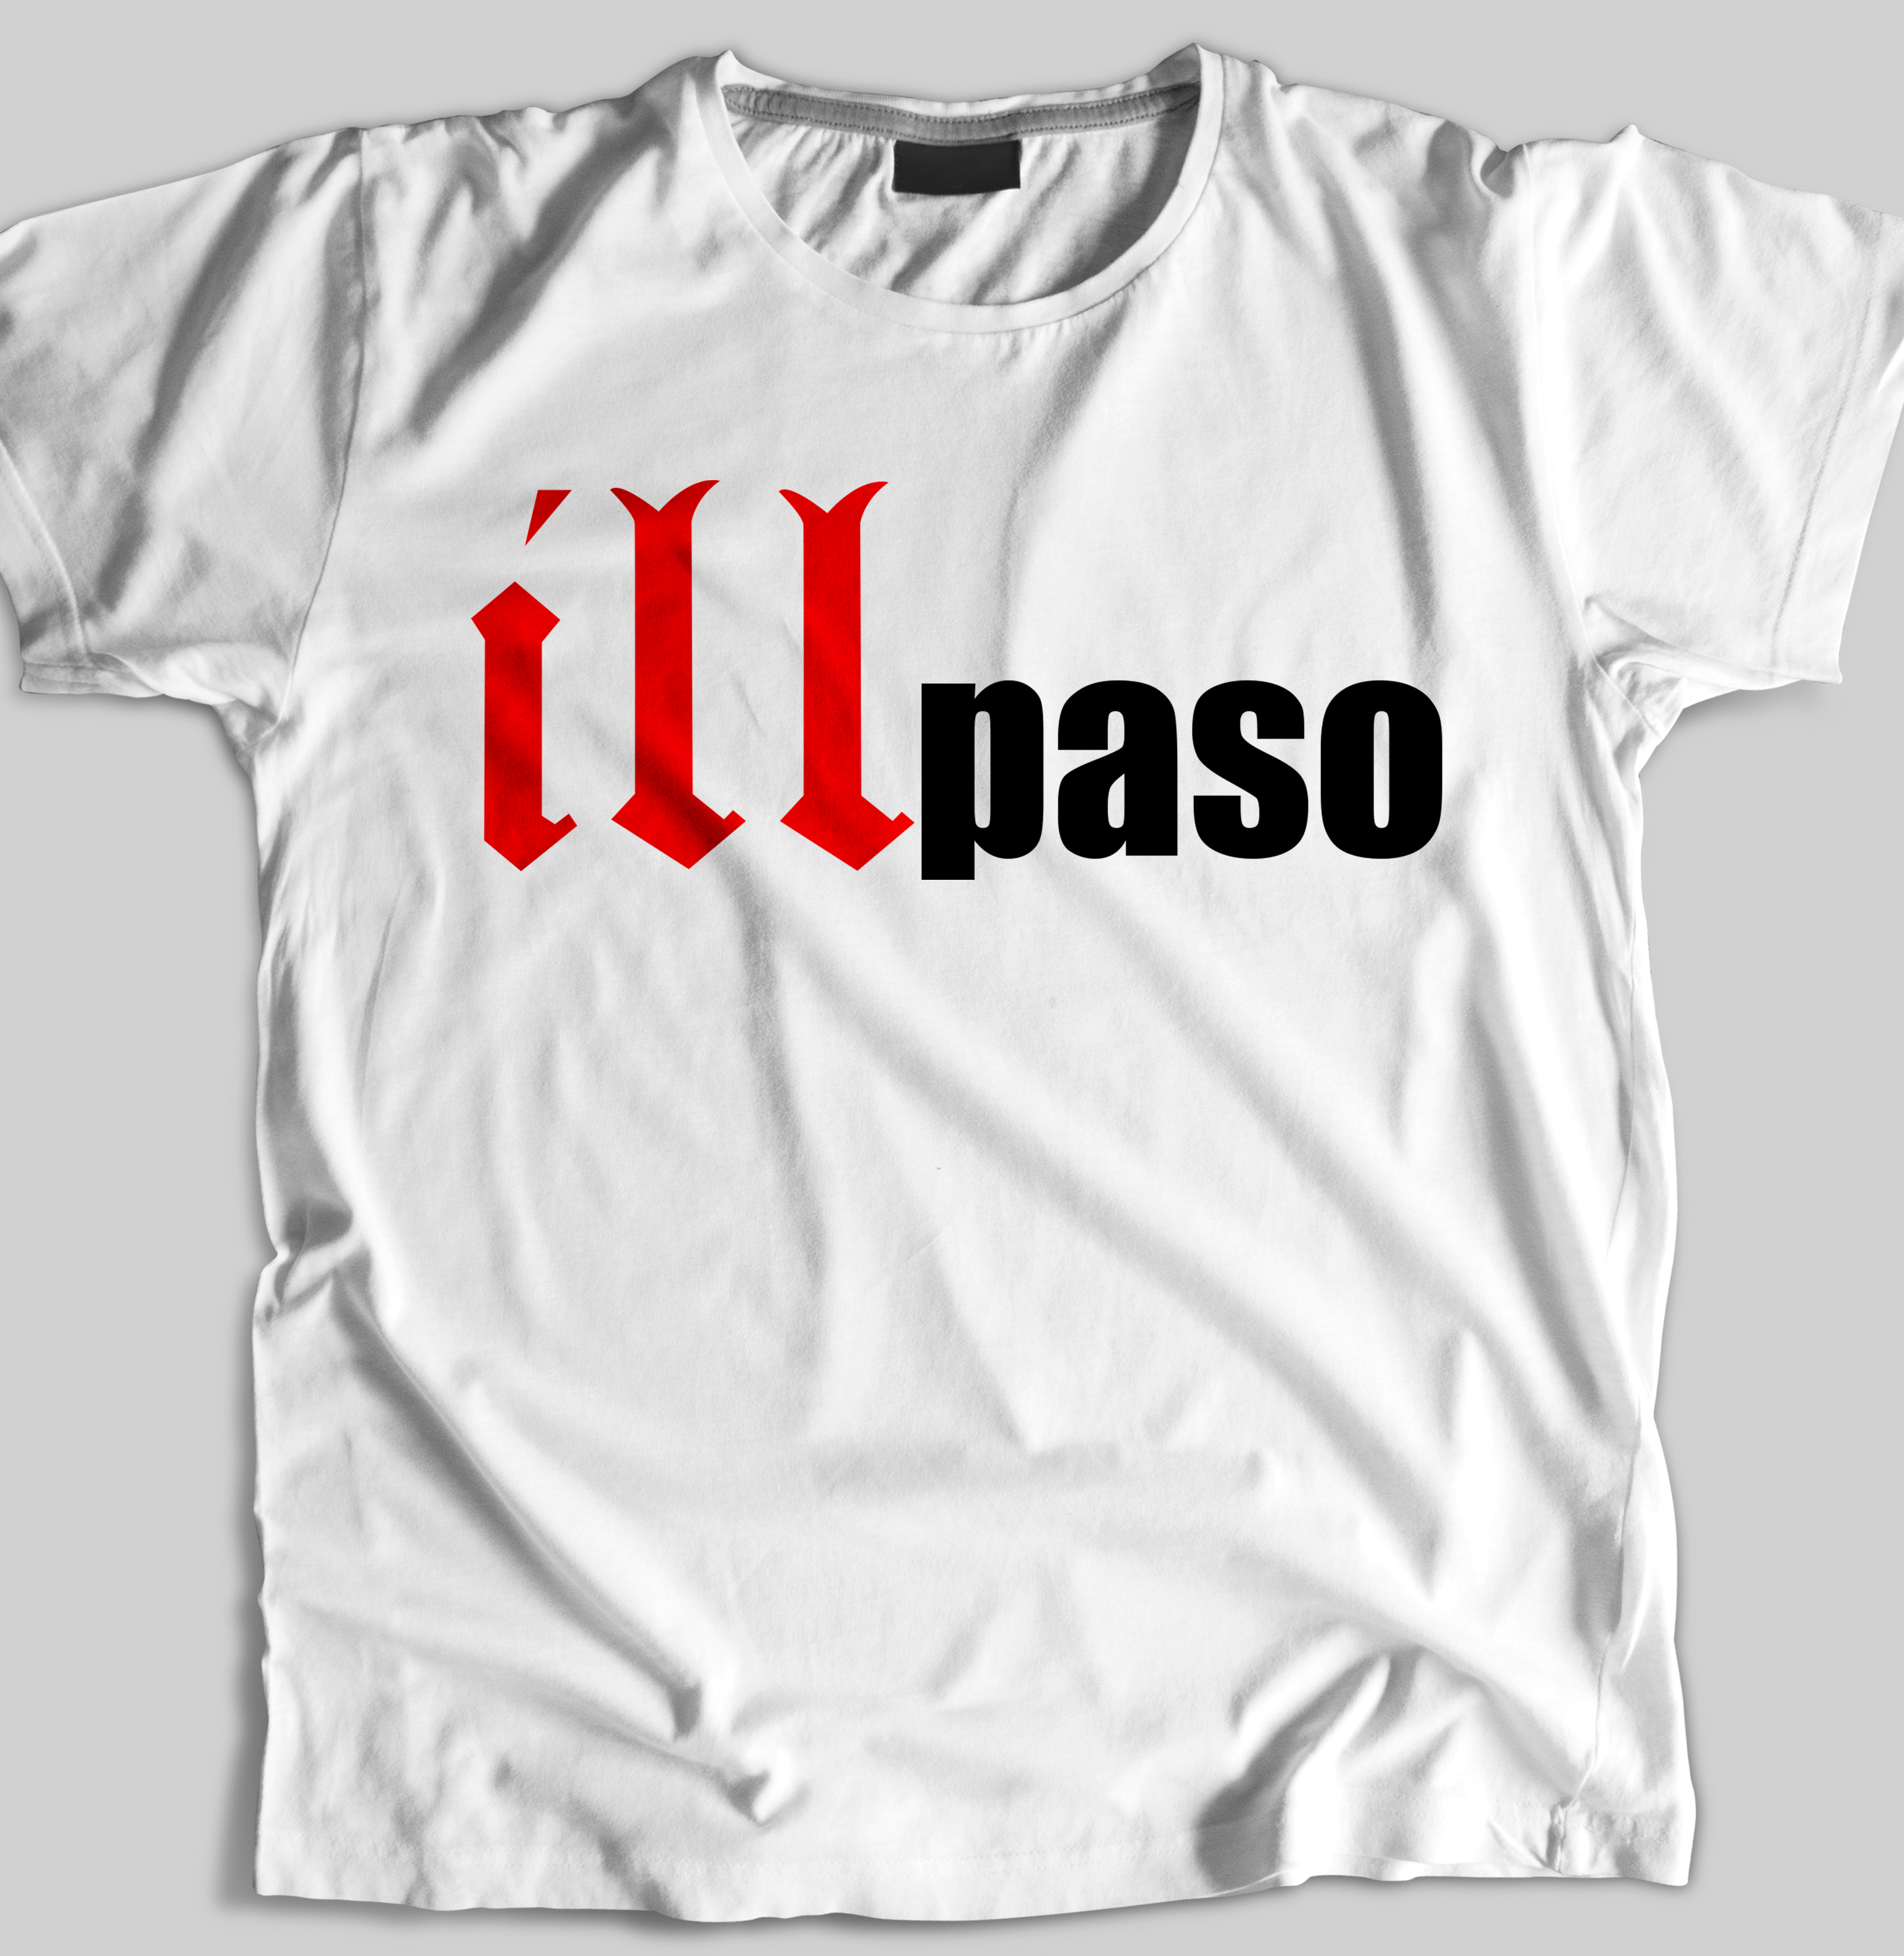 "illmatic Tribute" Men's T-shirt (White) by illpaso